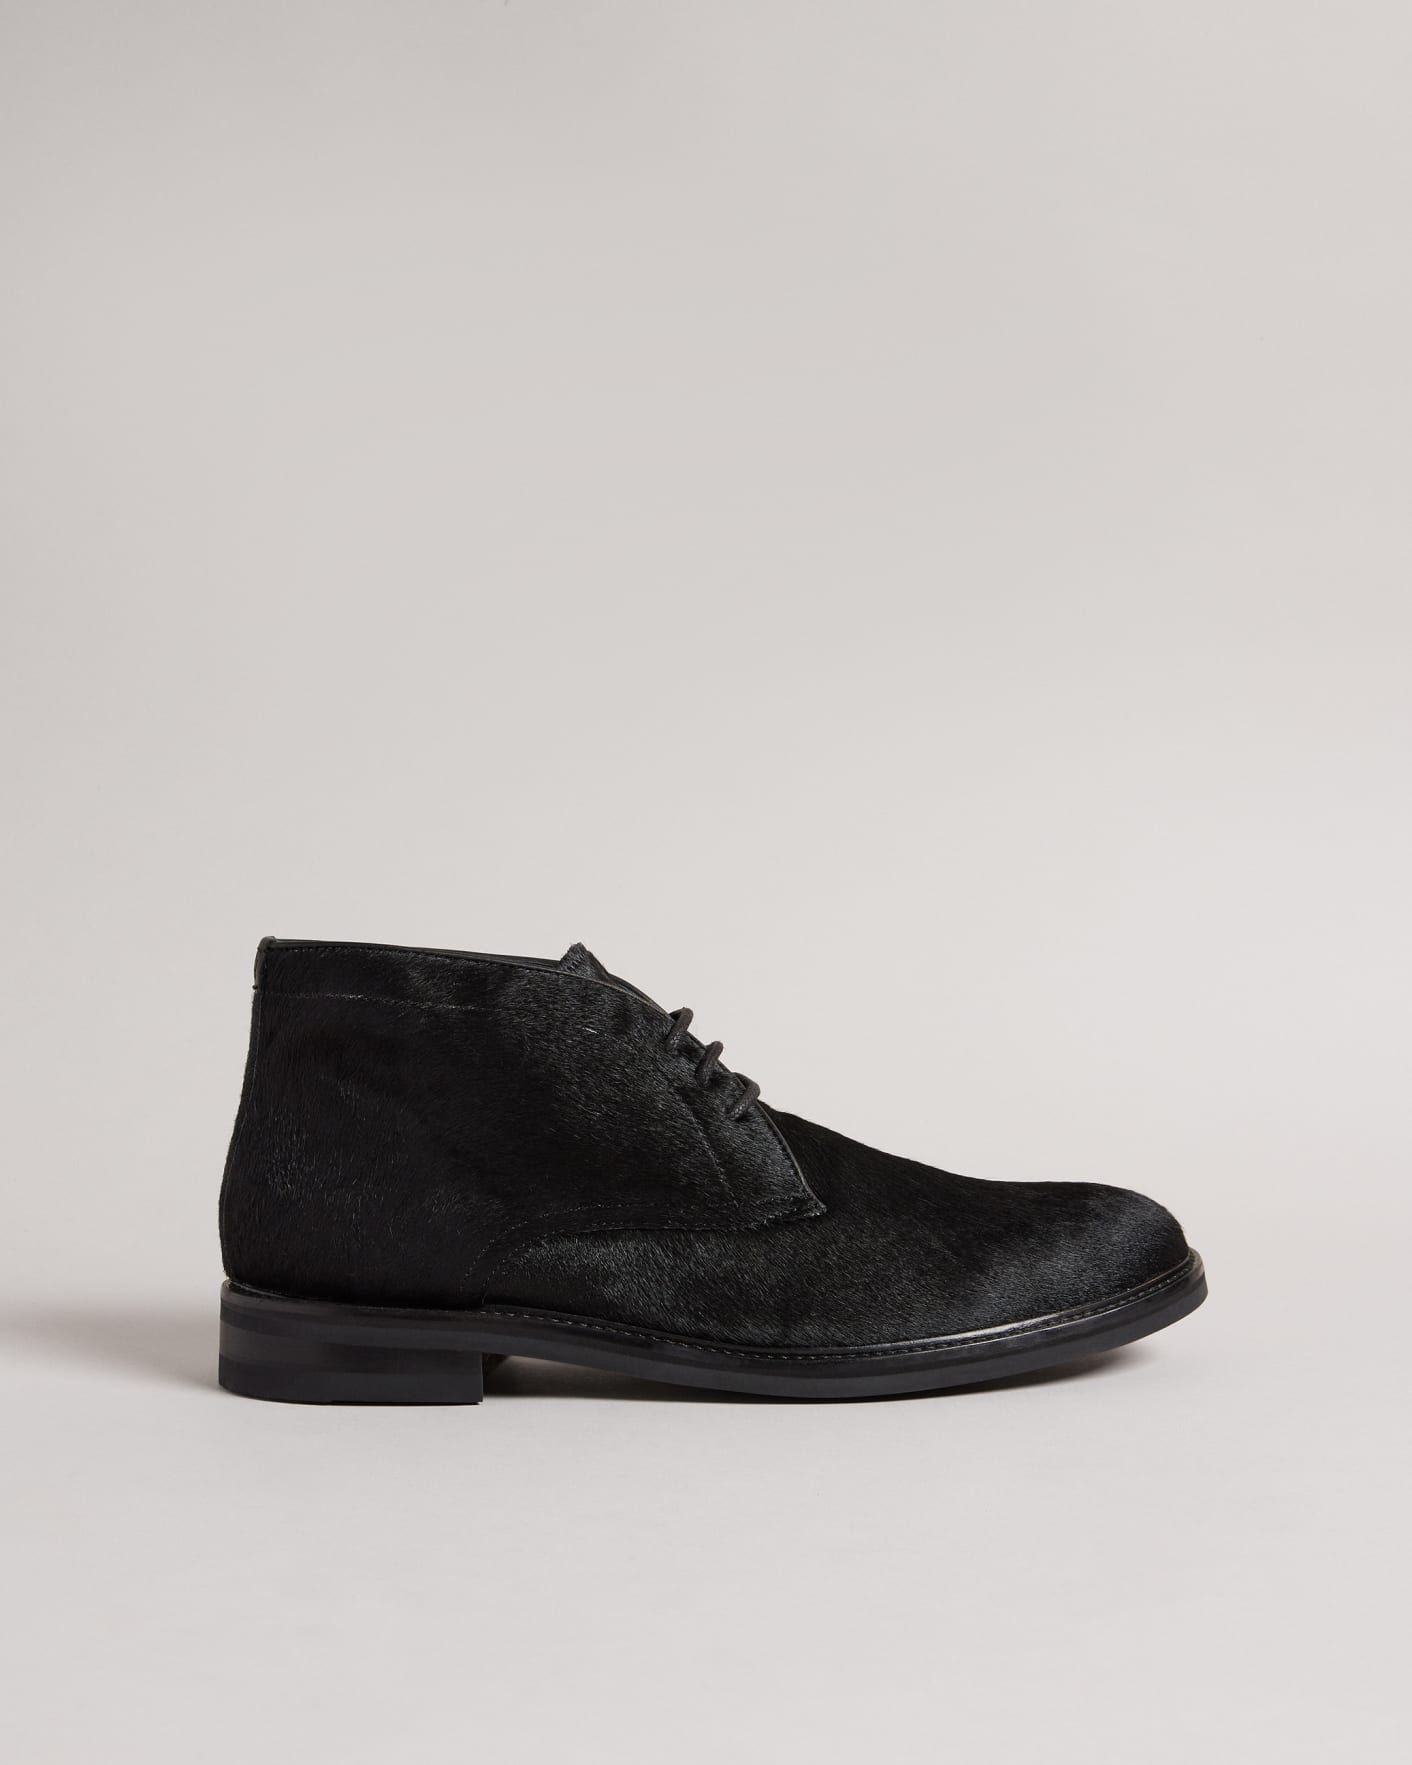 ANDREWH - BLACK | Shoes | Ted Baker DE